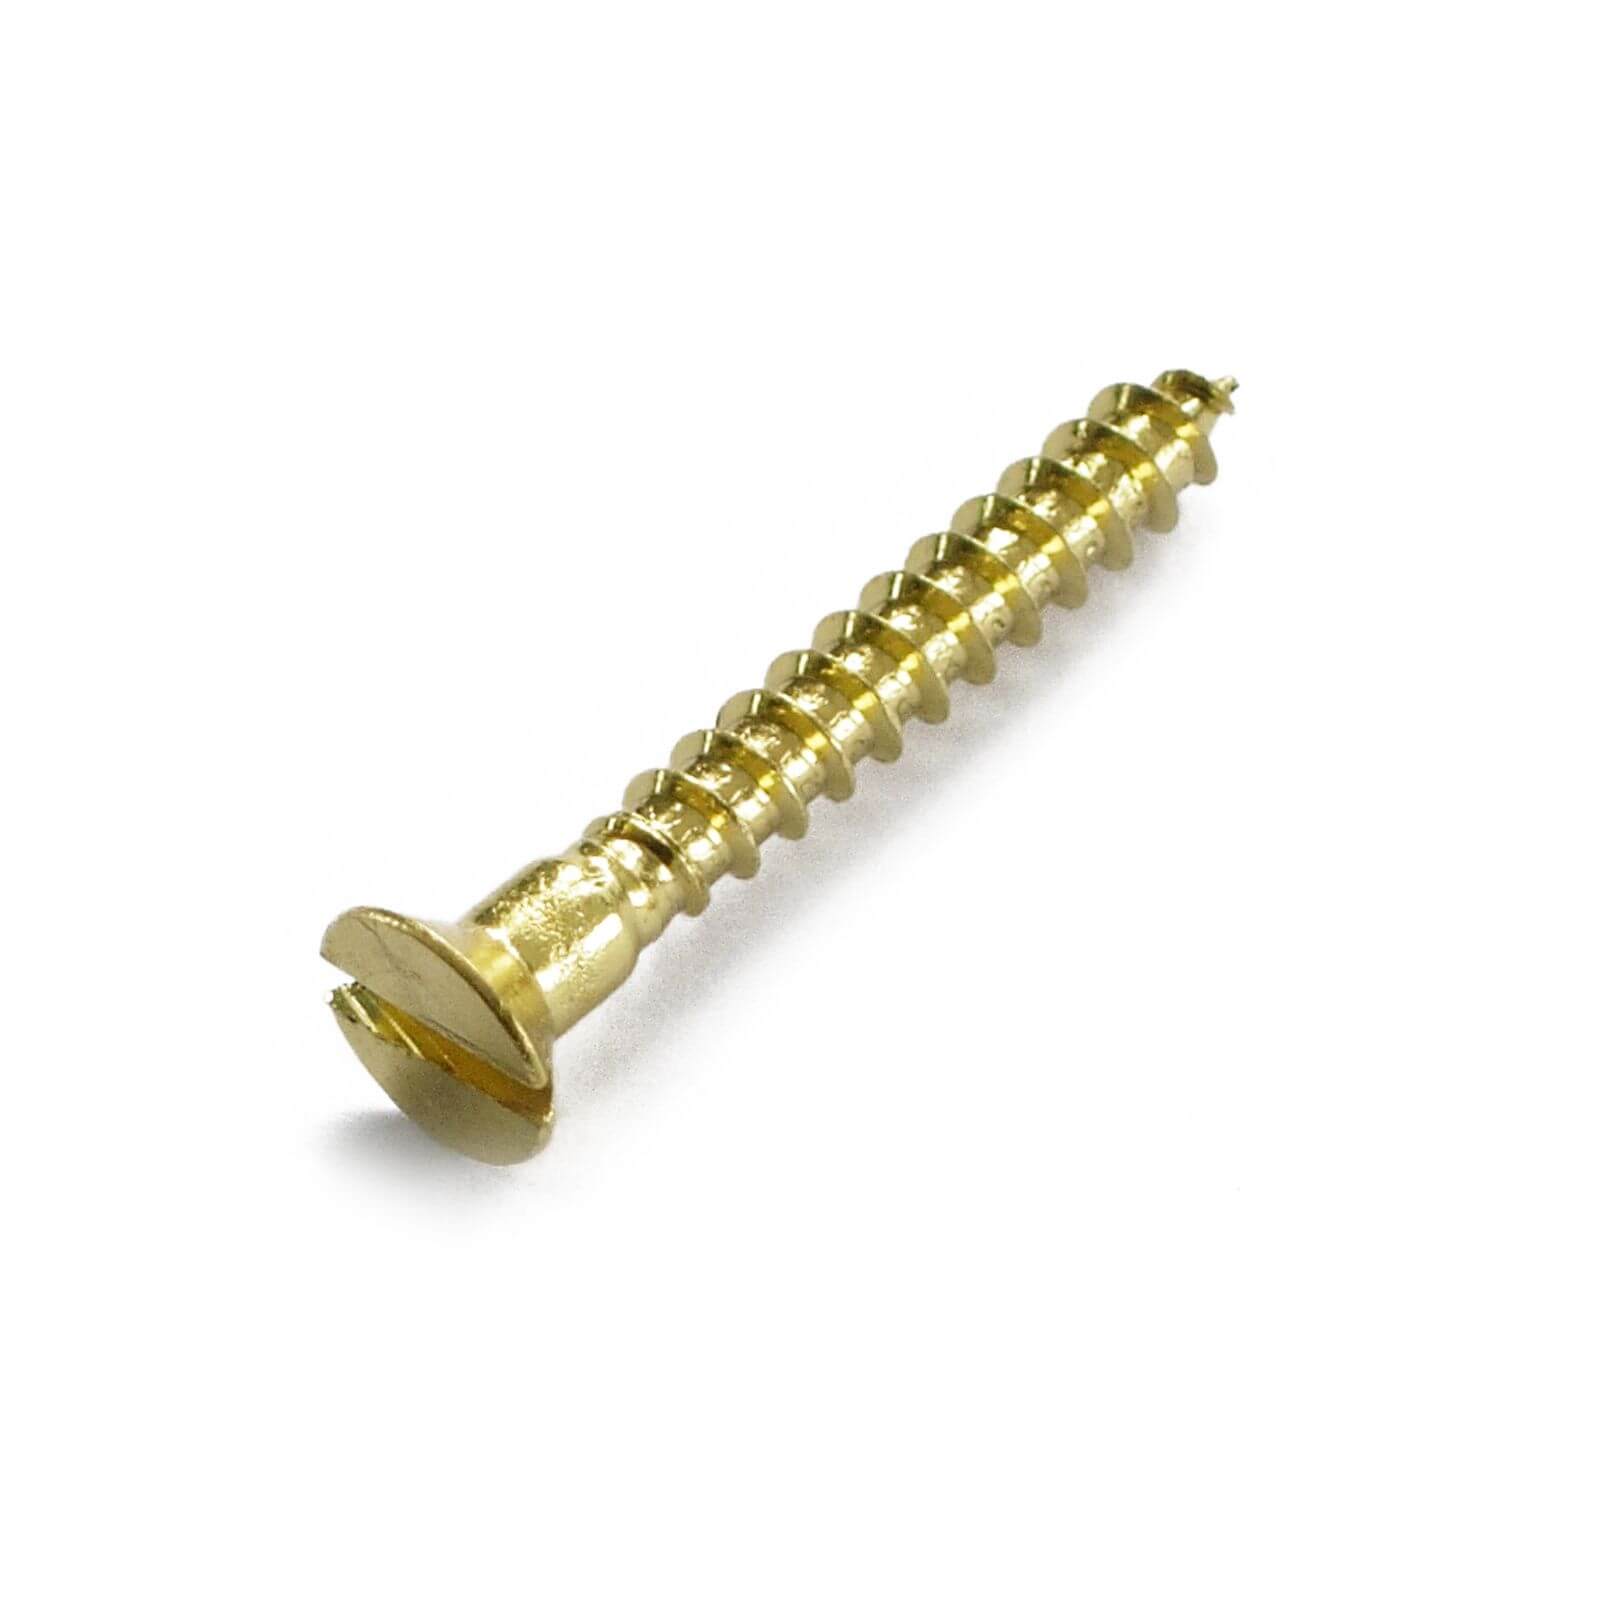 Wood Screw - Countersunk - Brass - 3 x 20mm - 10 Pack